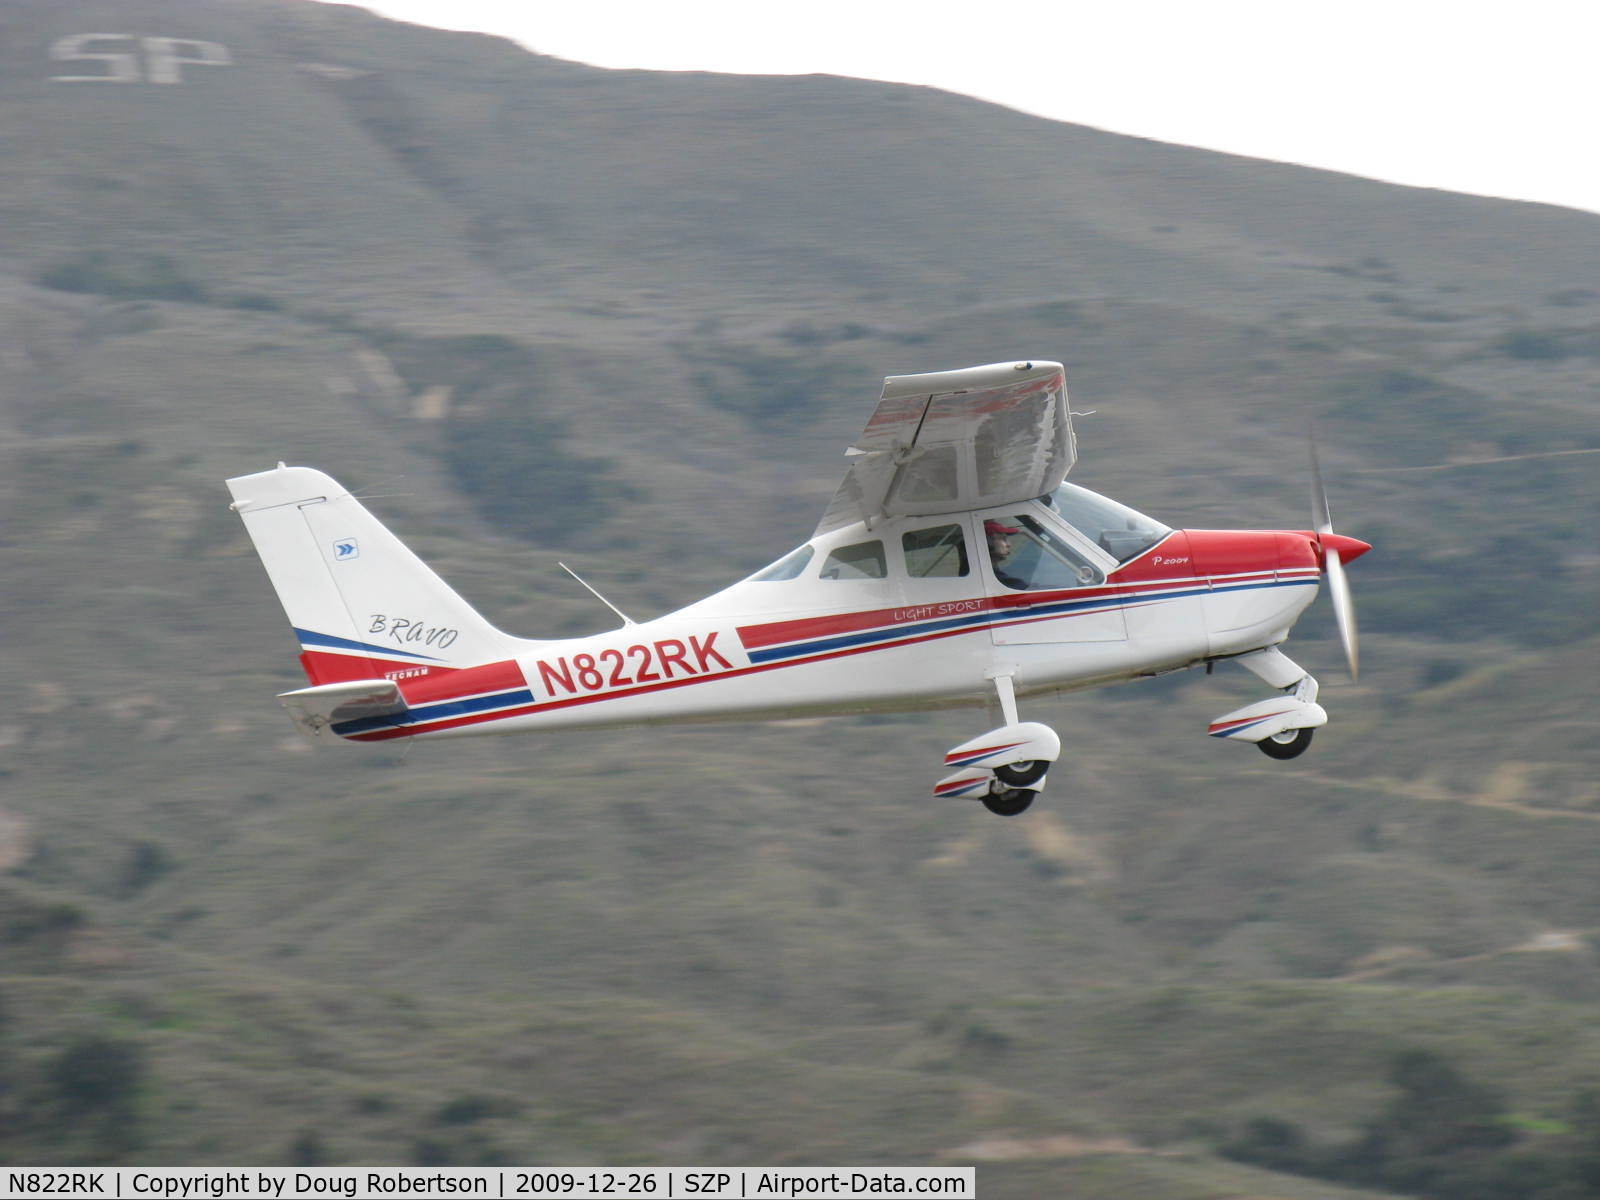 N822RK, 2007 Tecnam P-2004 Bravo C/N 096, 2007 Costruzioni Aeronautiche Tecnam P2004 BRAVO, Rotax 912ULS 100 Hp, takeoff climb Rwy 22